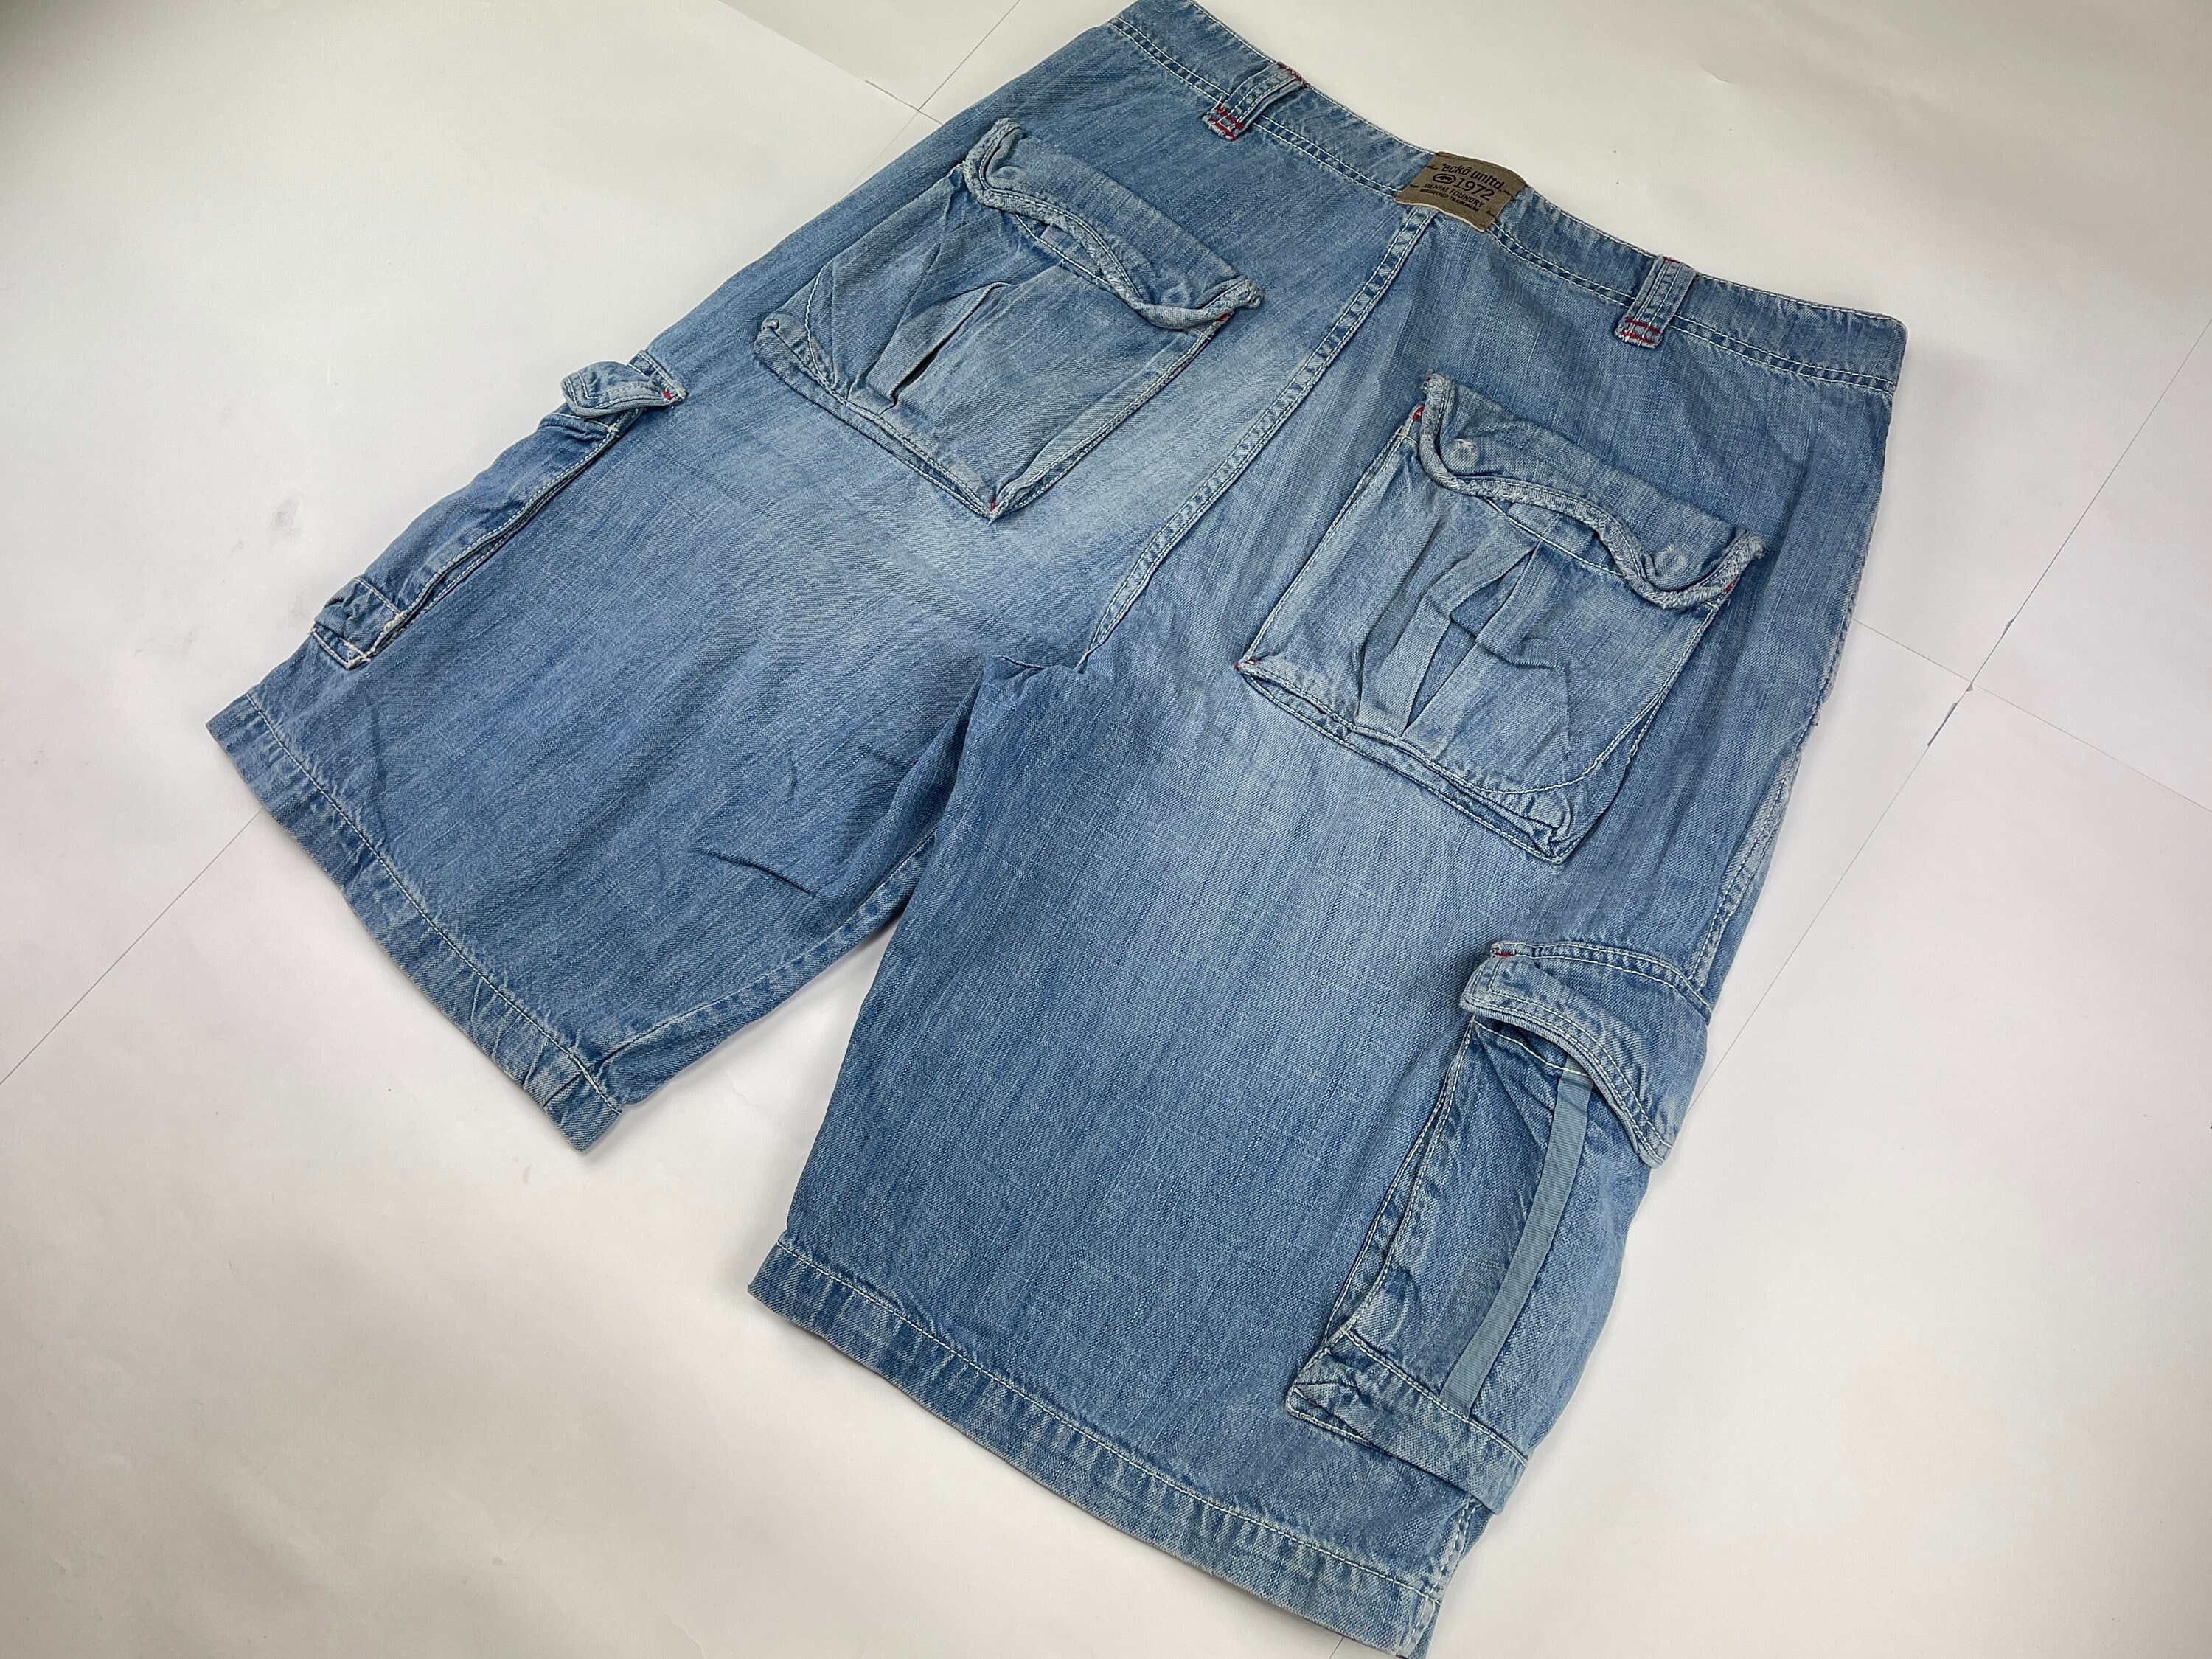 Ecko Unltd jeans shorts blue vintage Ecko jeans shorts 90s | Etsy